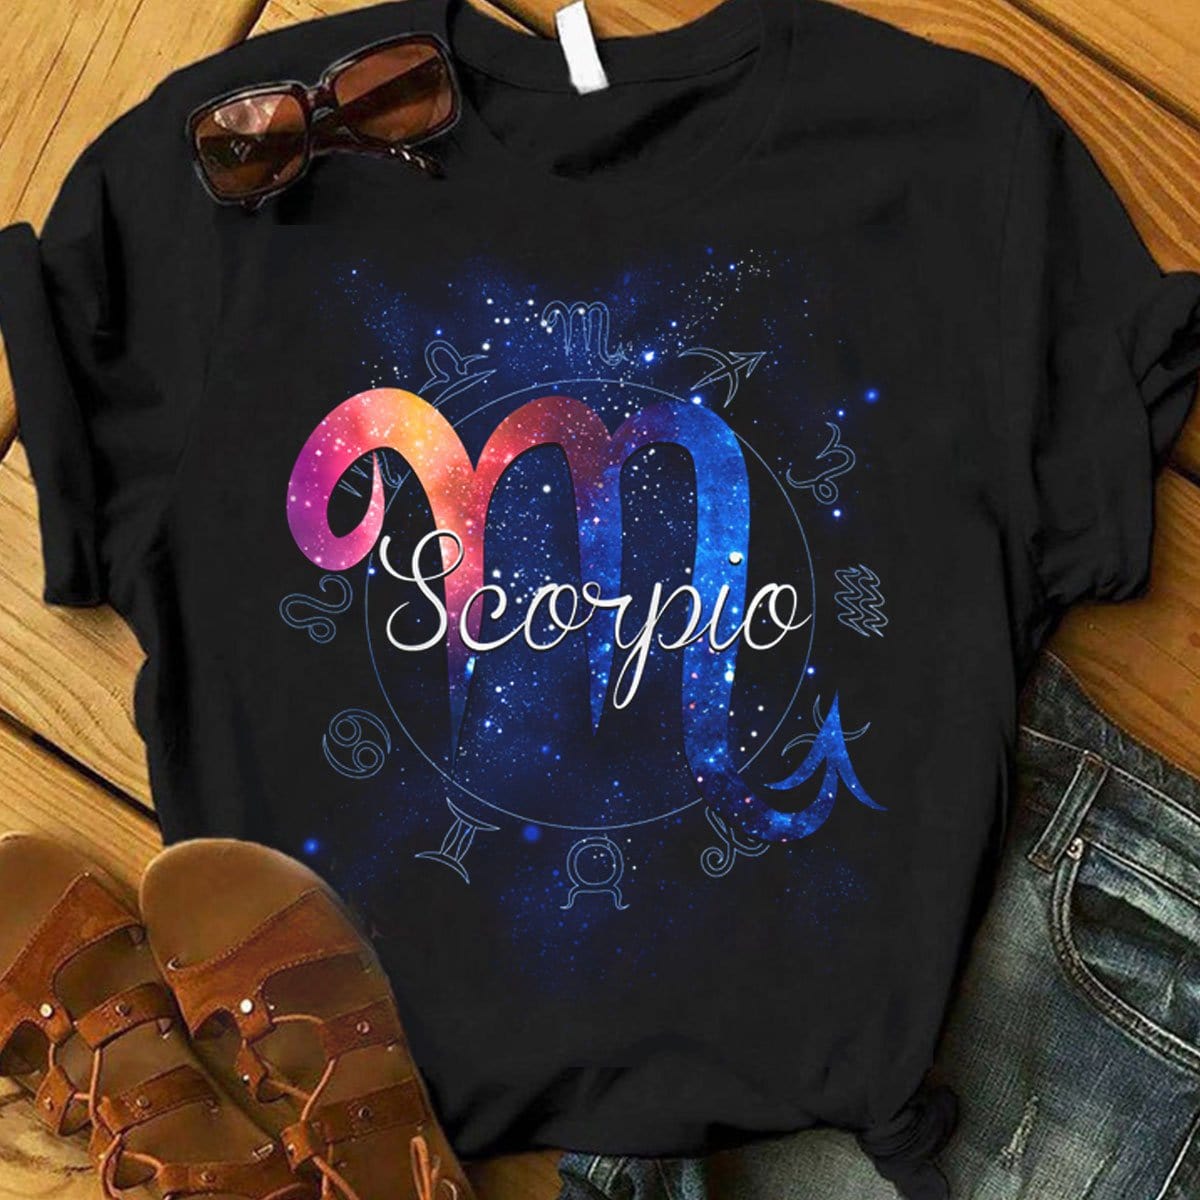 Scorpio Shirts With Zodiac Sign